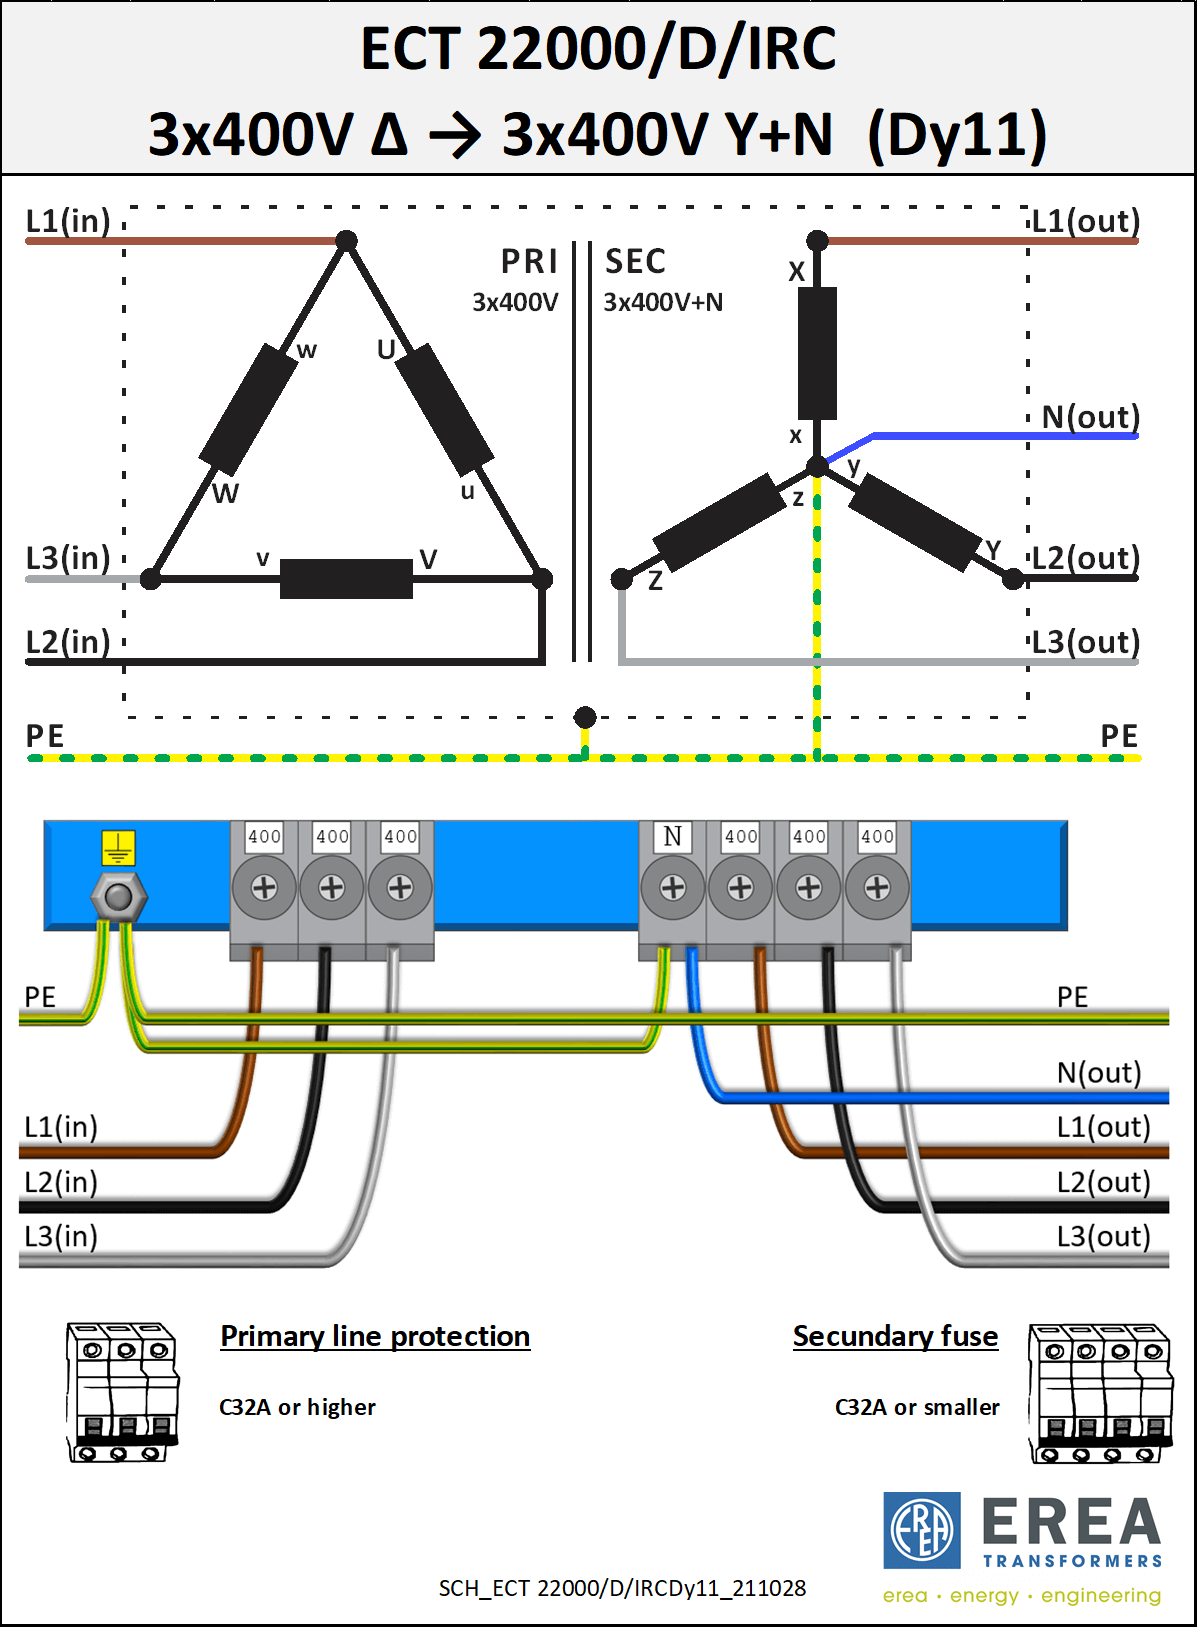 EREA 3 fasen transformator Upri 400V ∆ // Usec 400V Y+N  22000VA (22KVA) ECT 22000/D/IRC